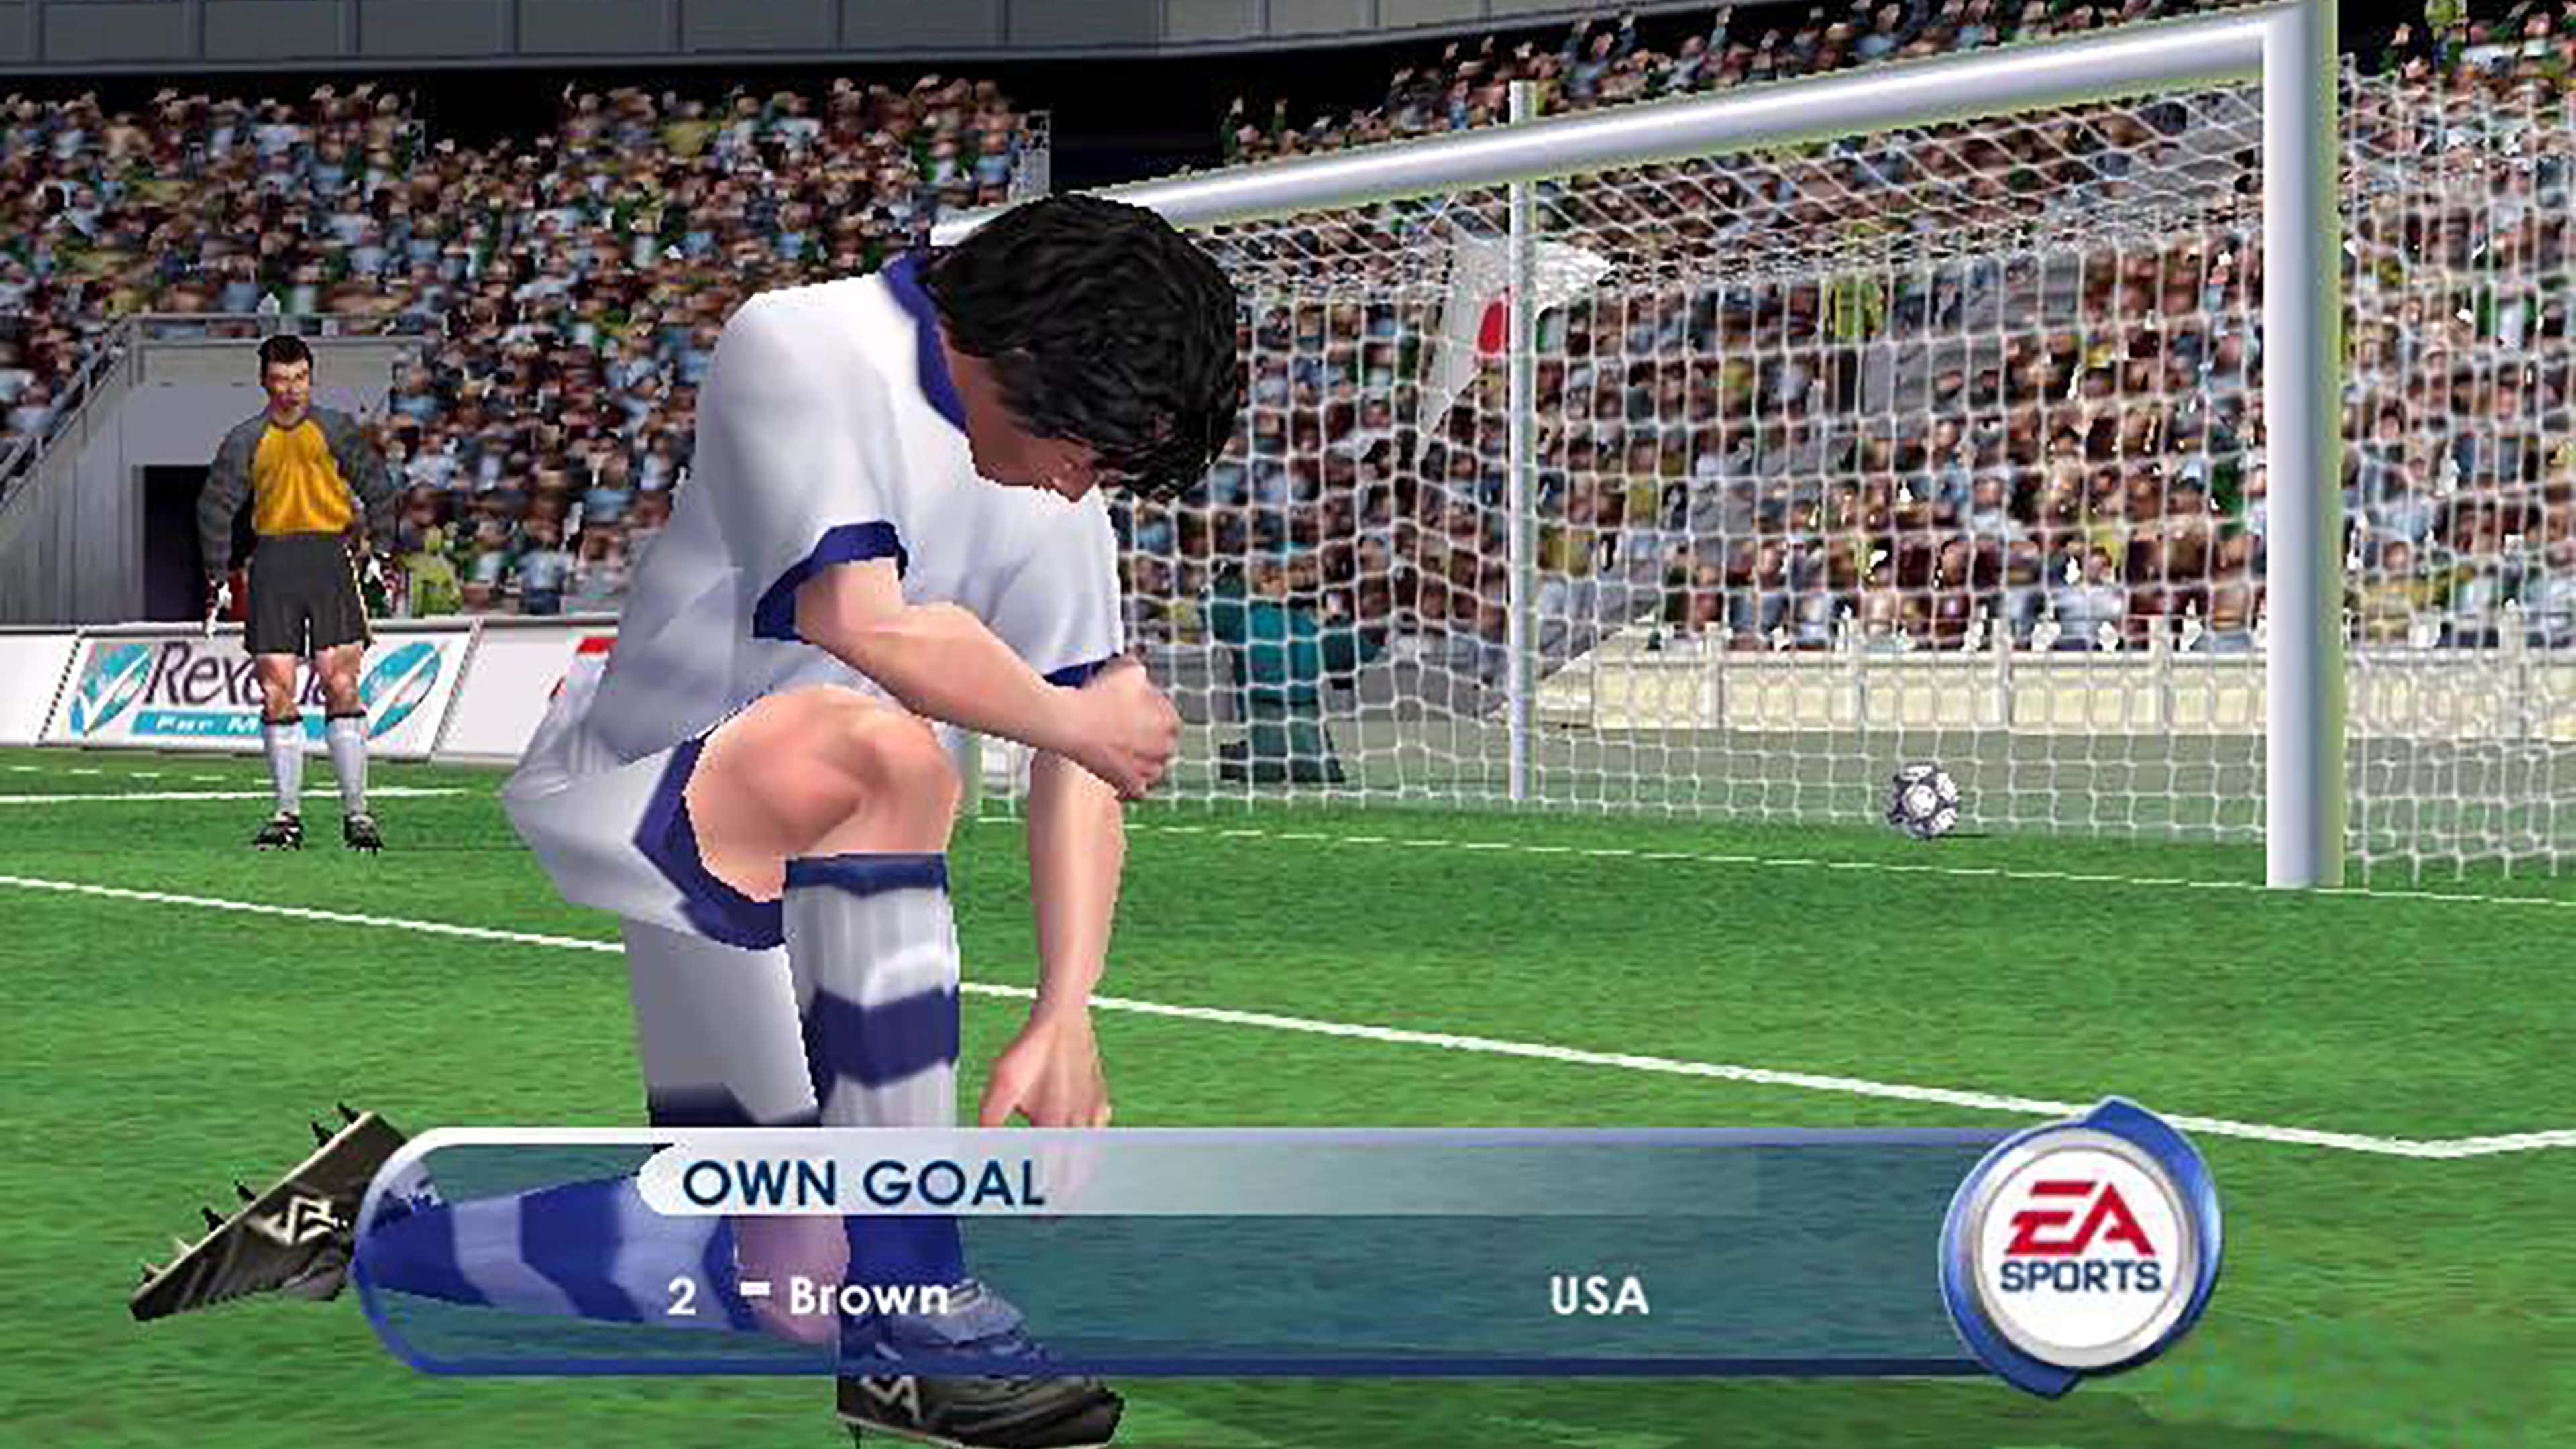 FIFA Soccer 97 (Game) - Giant Bomb